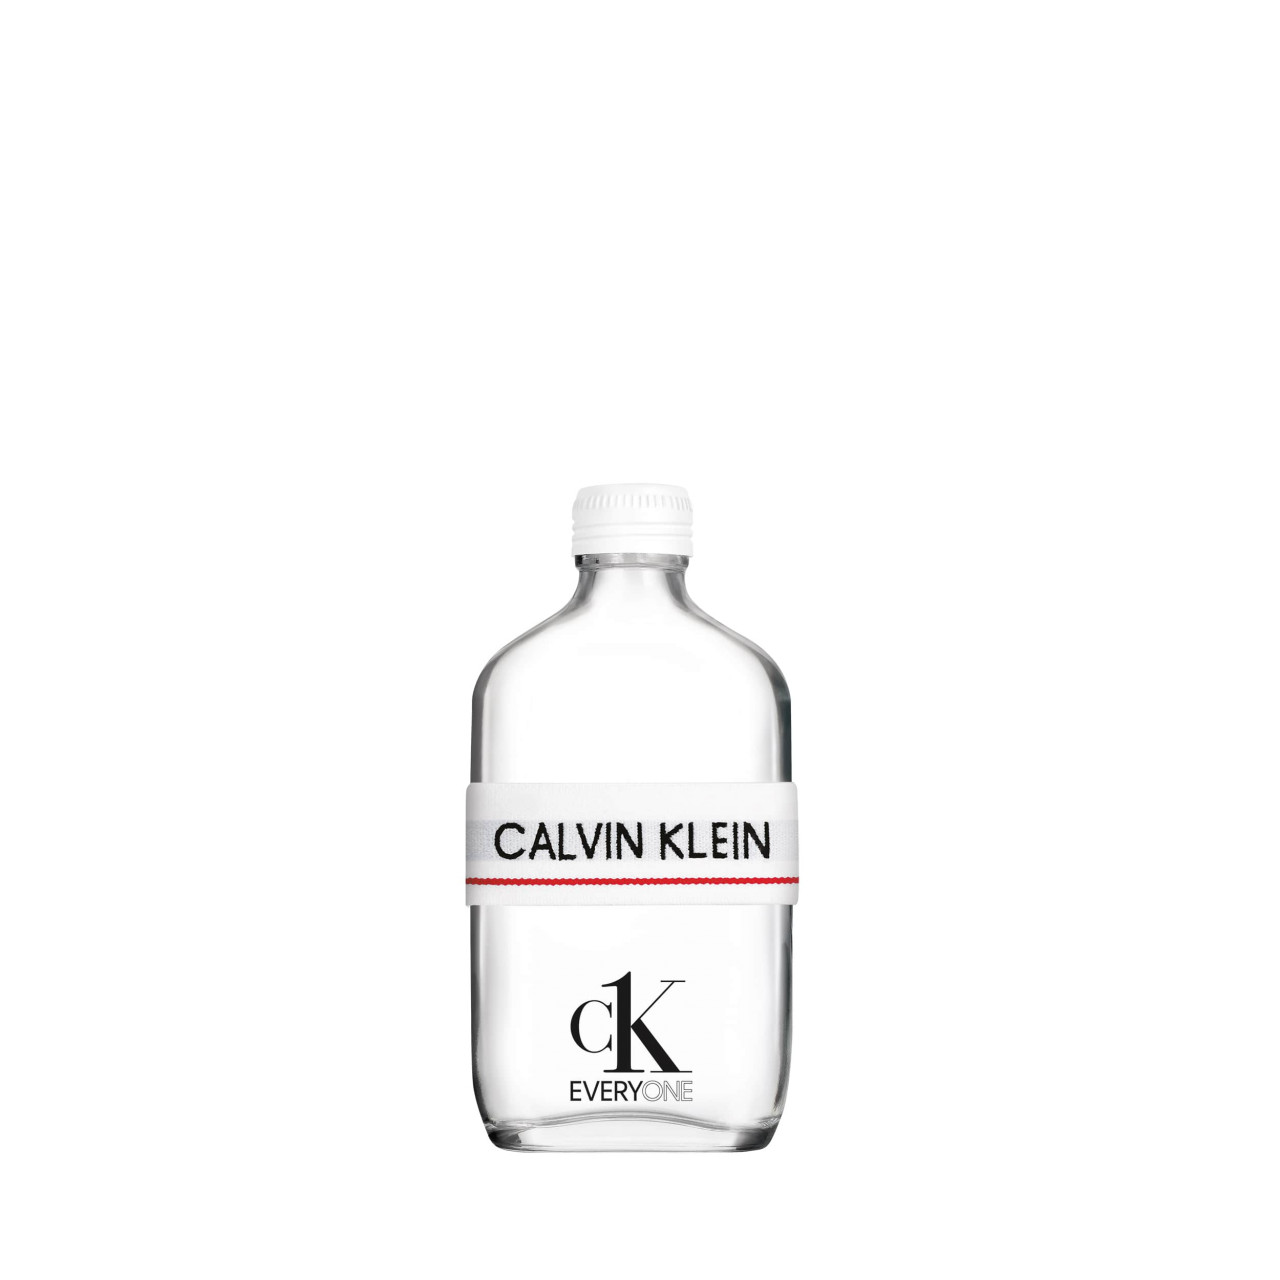 Calvin Klein - CK Everyone Eau de Toilette -  50 ml